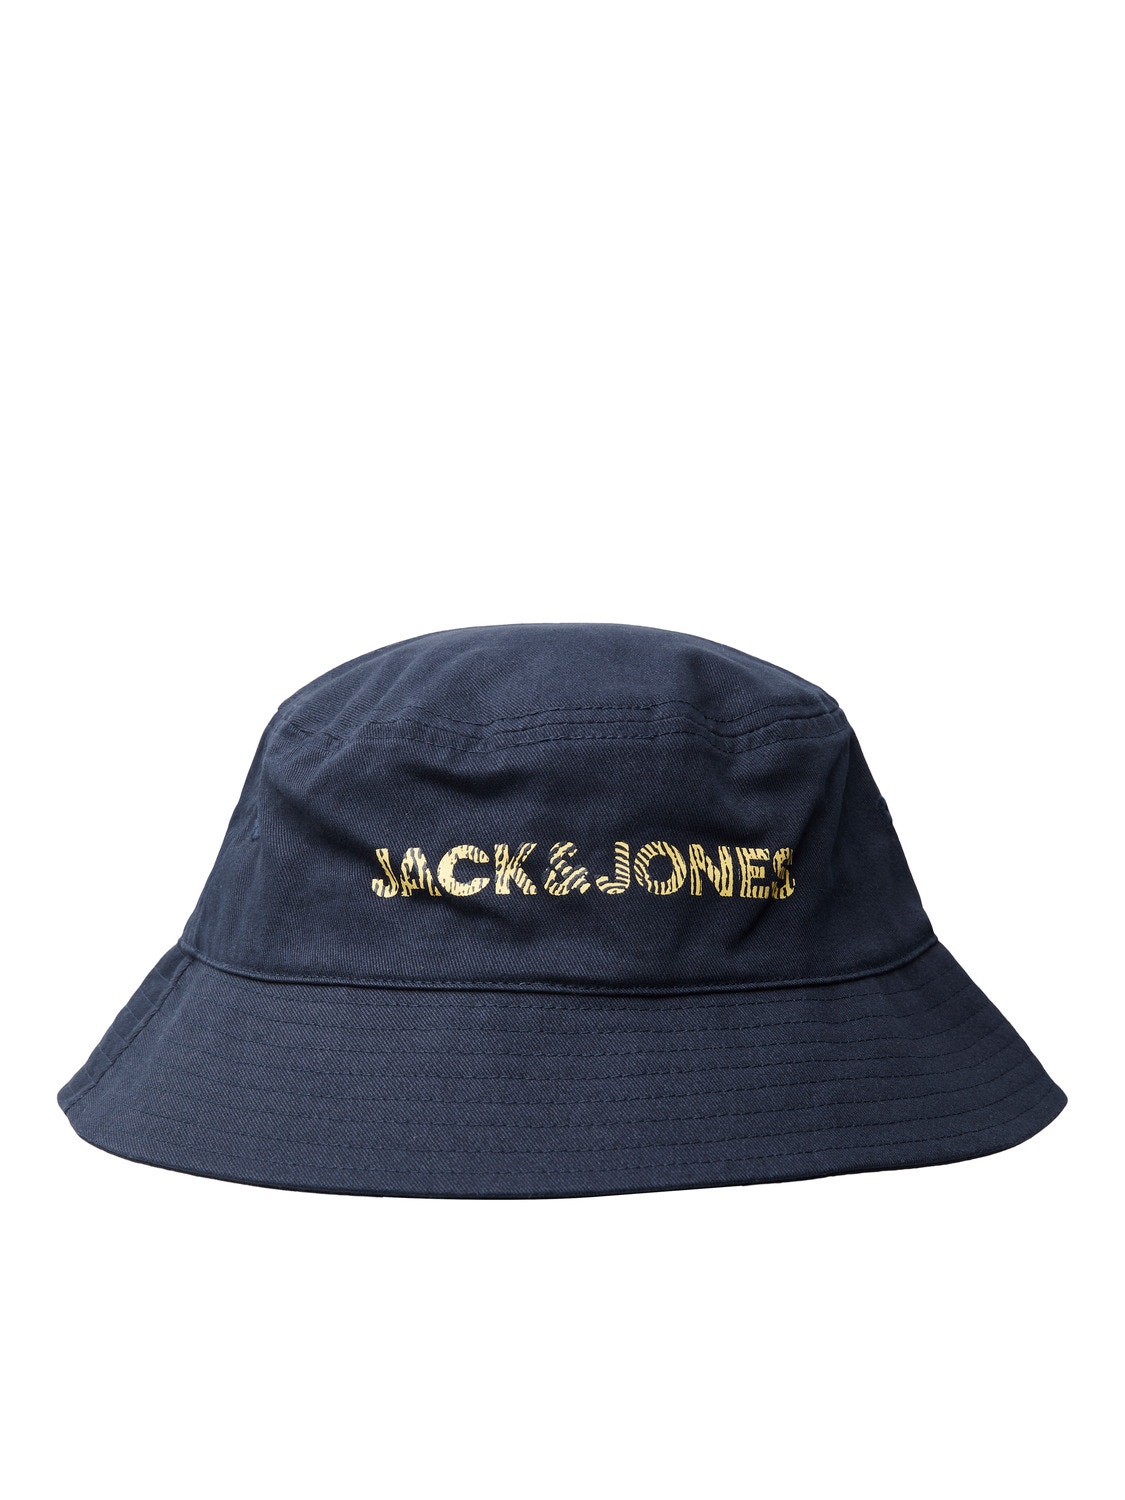 Jack & Jones Bøllehat -Navy Blazer - 12235410